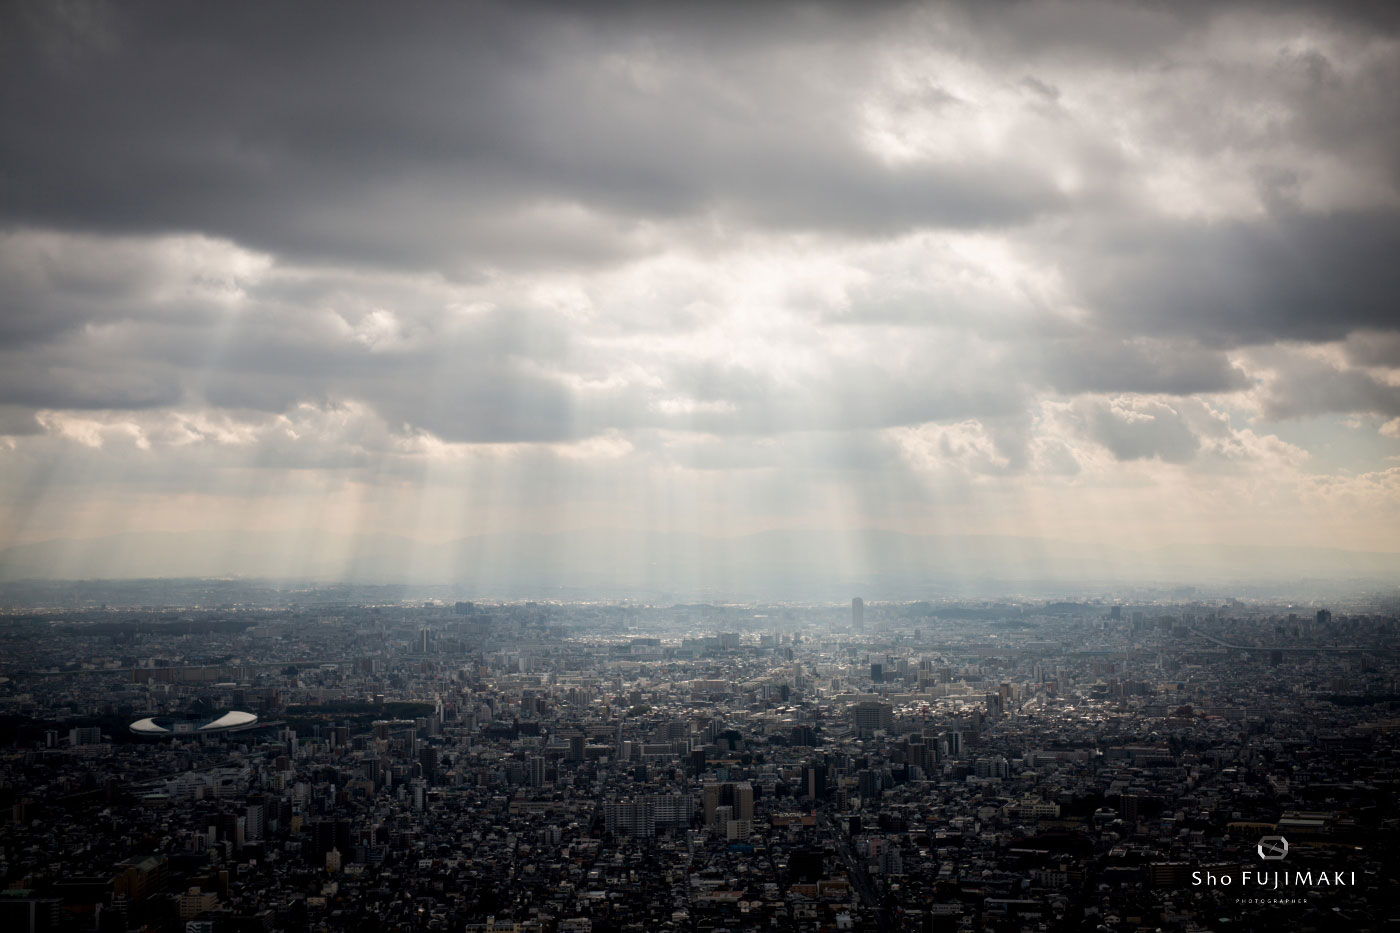 Osaka from the top of the 300m tall Abeno Harukas tower, site of the Harukas Skyrun. ©Sho Fujimaki